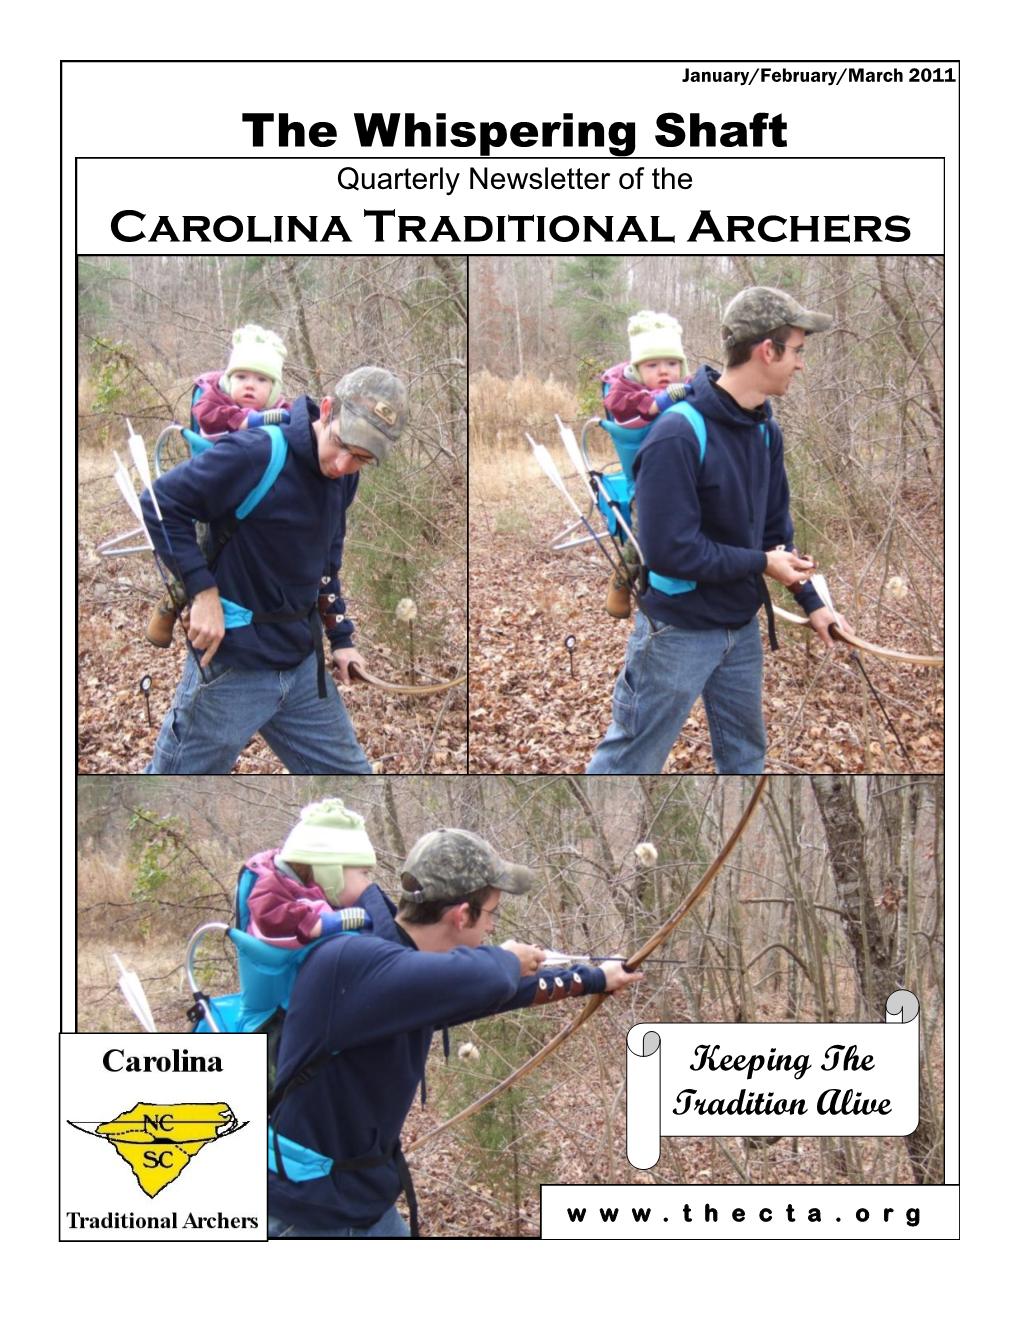 Carolina Traditional Archers the Whispering Shaft